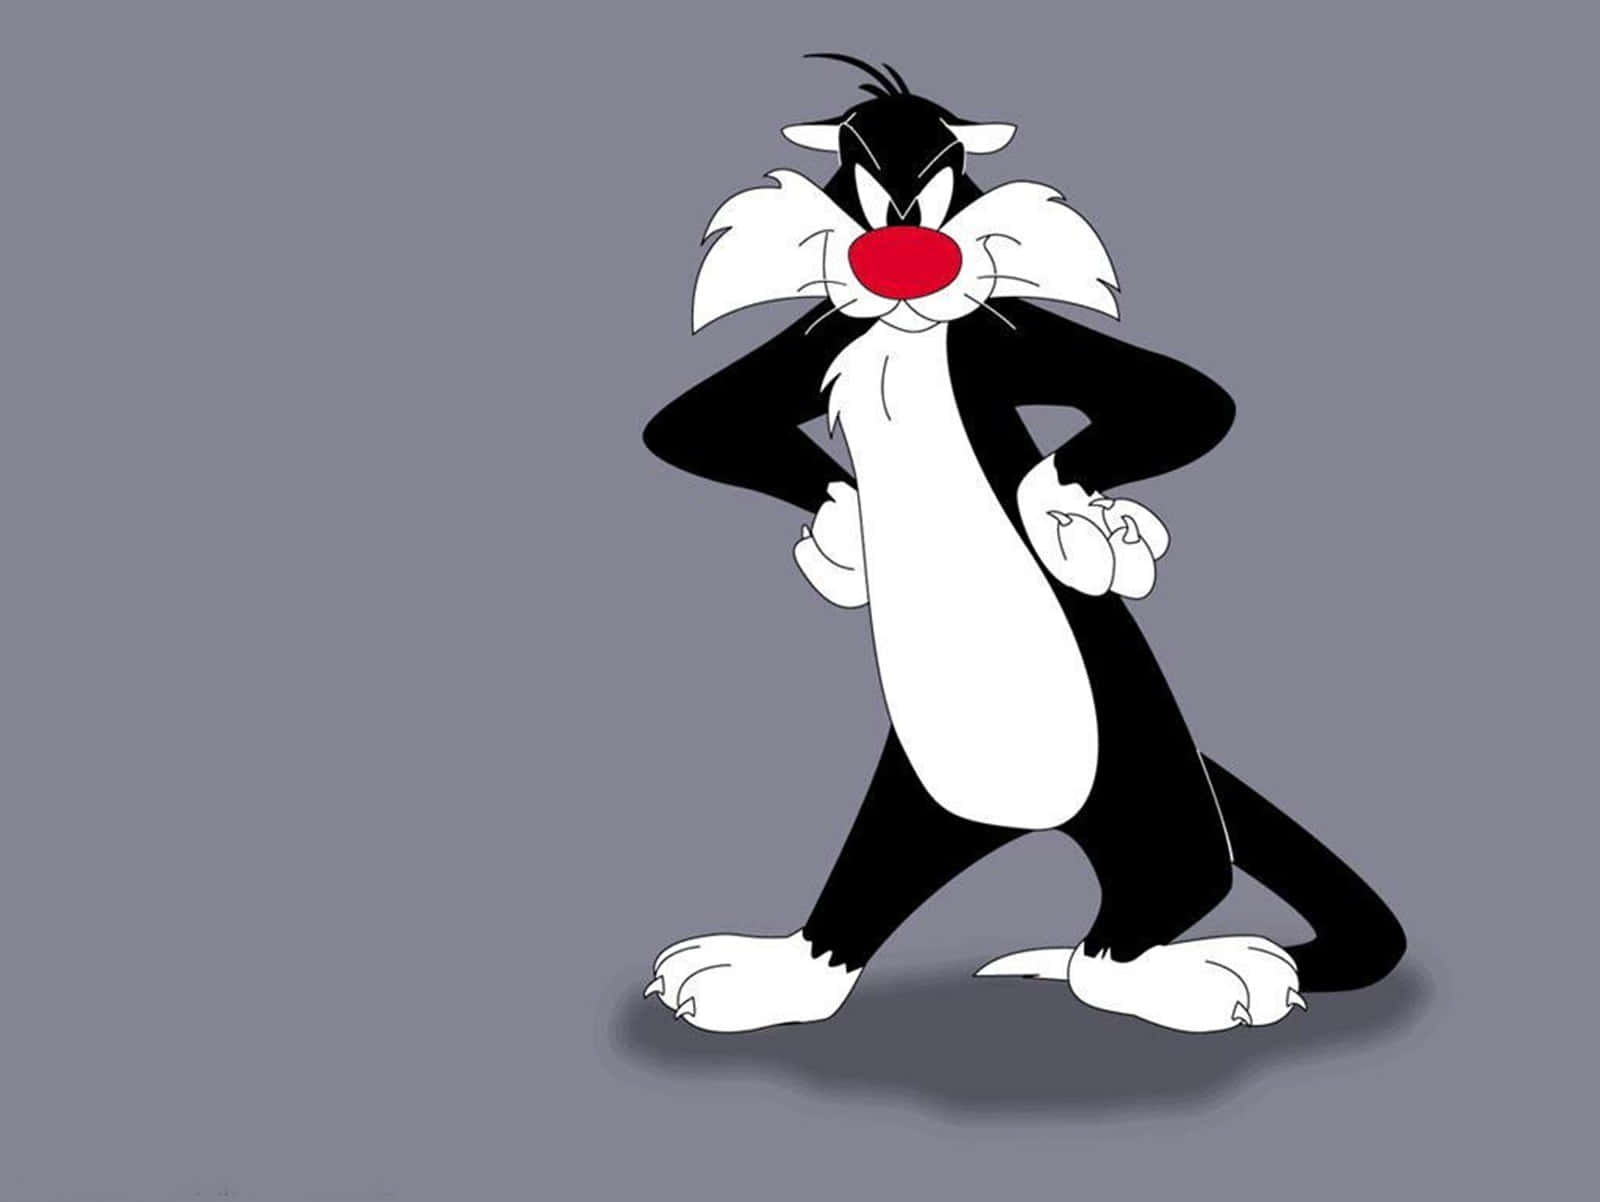 Sylvester,o Gato, Personagem Do Looney Tunes Vivendo A Vida Alta!